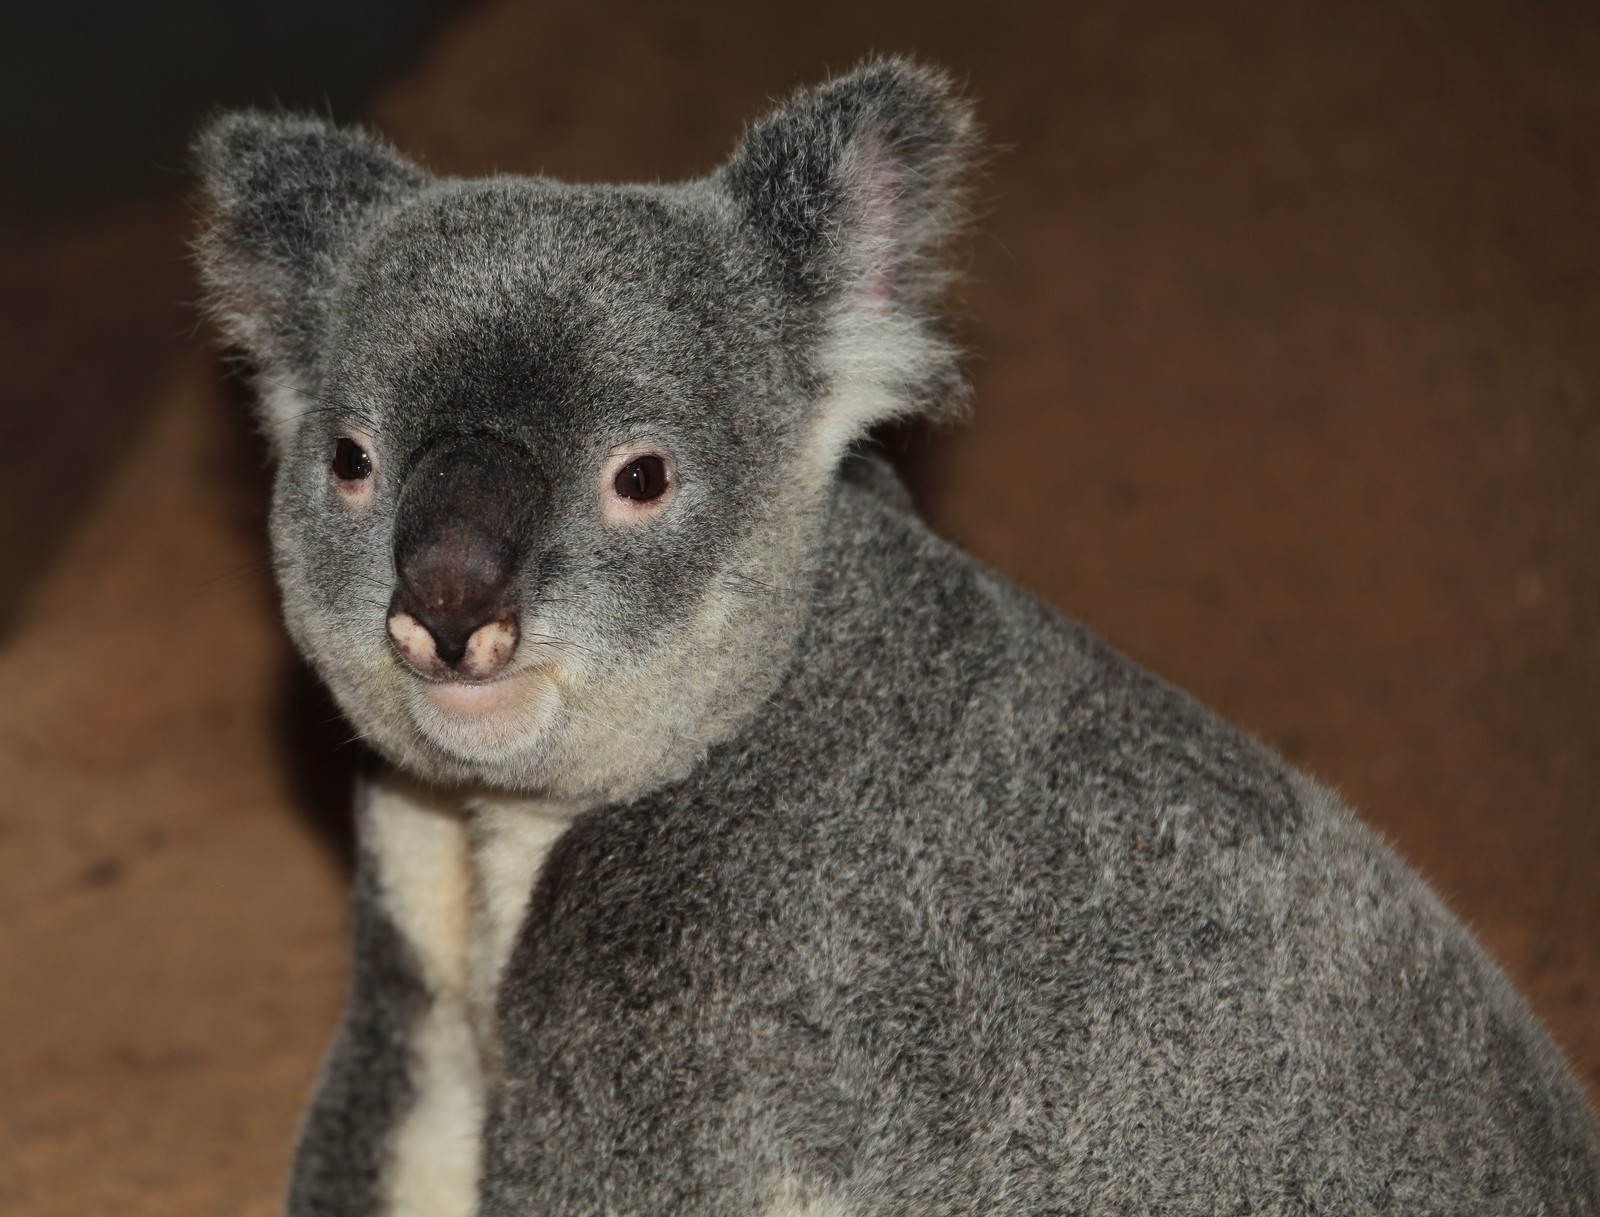 Australie Corroboree 6 Koala Peluche Gris Blanc w / Boomerang